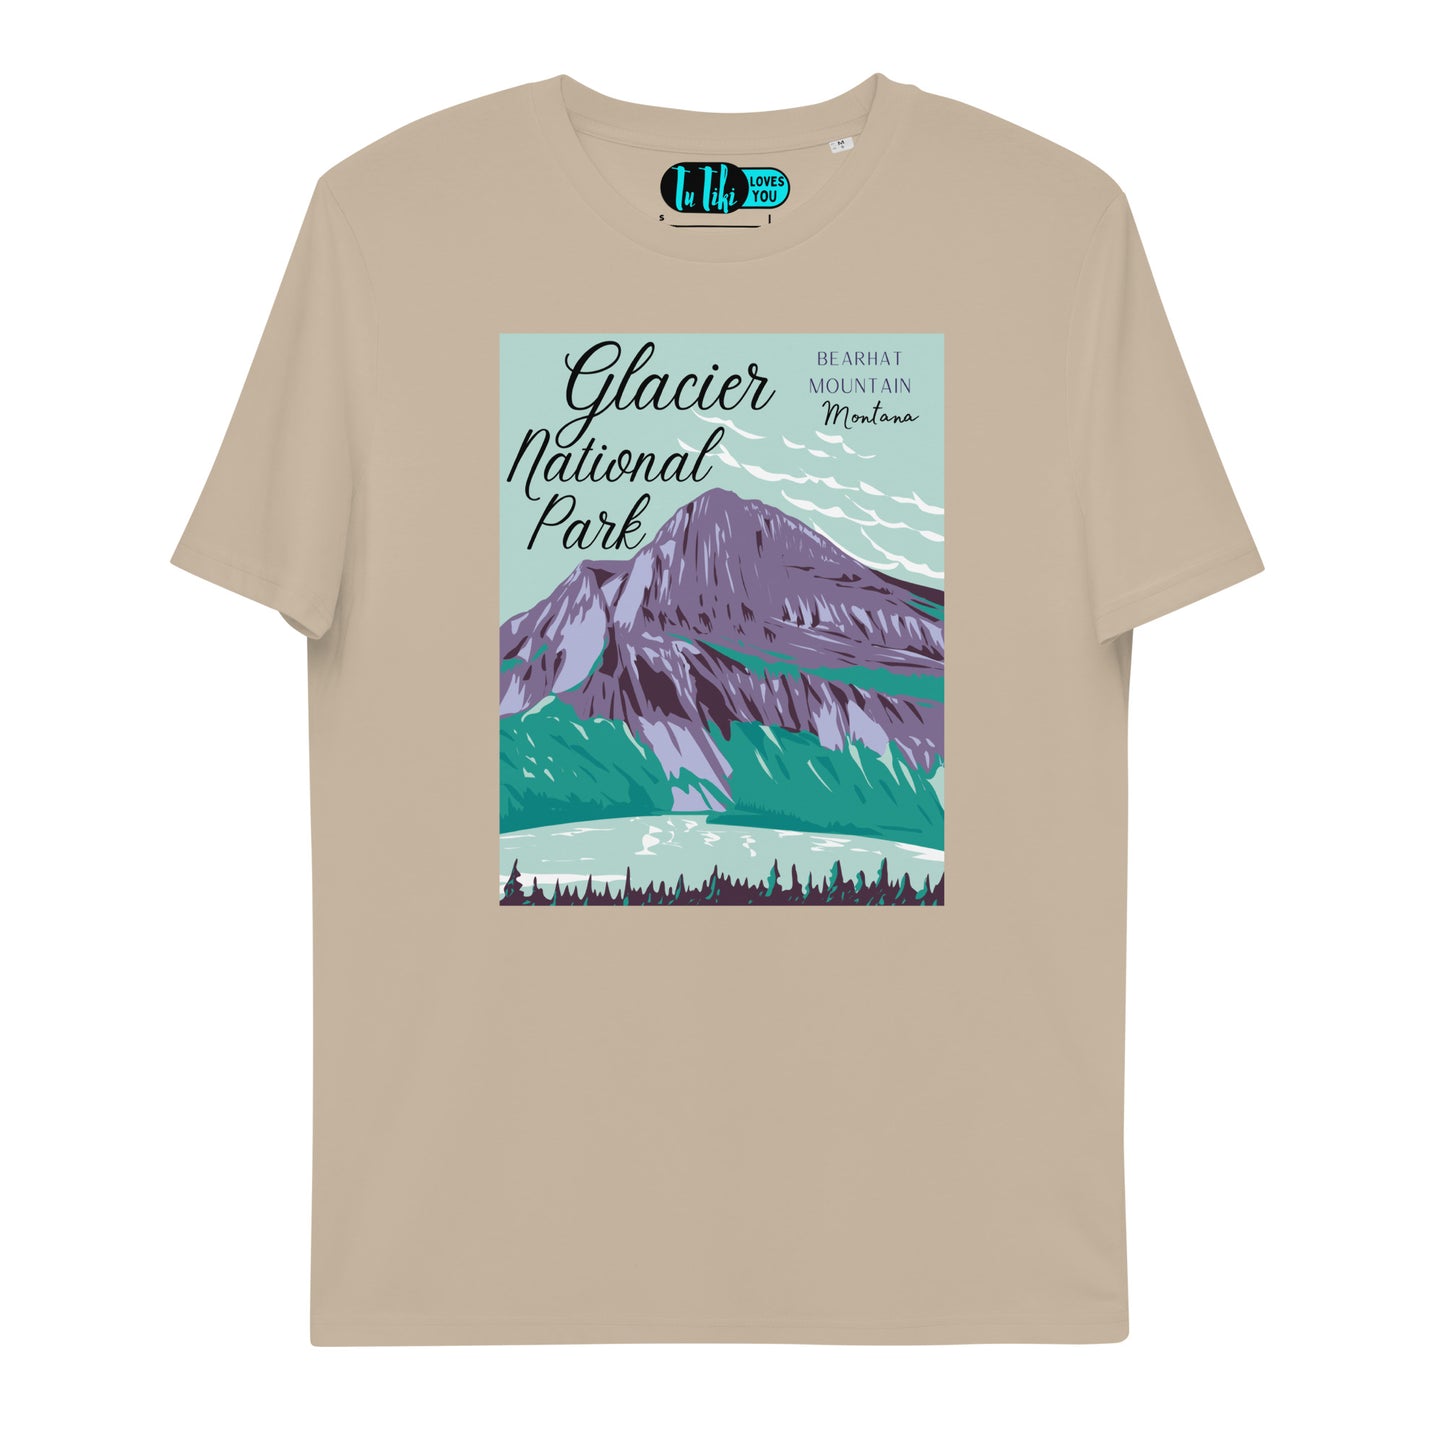 Organic Cotton GLACIER National Park Classic Tee: Bearhat Mountain